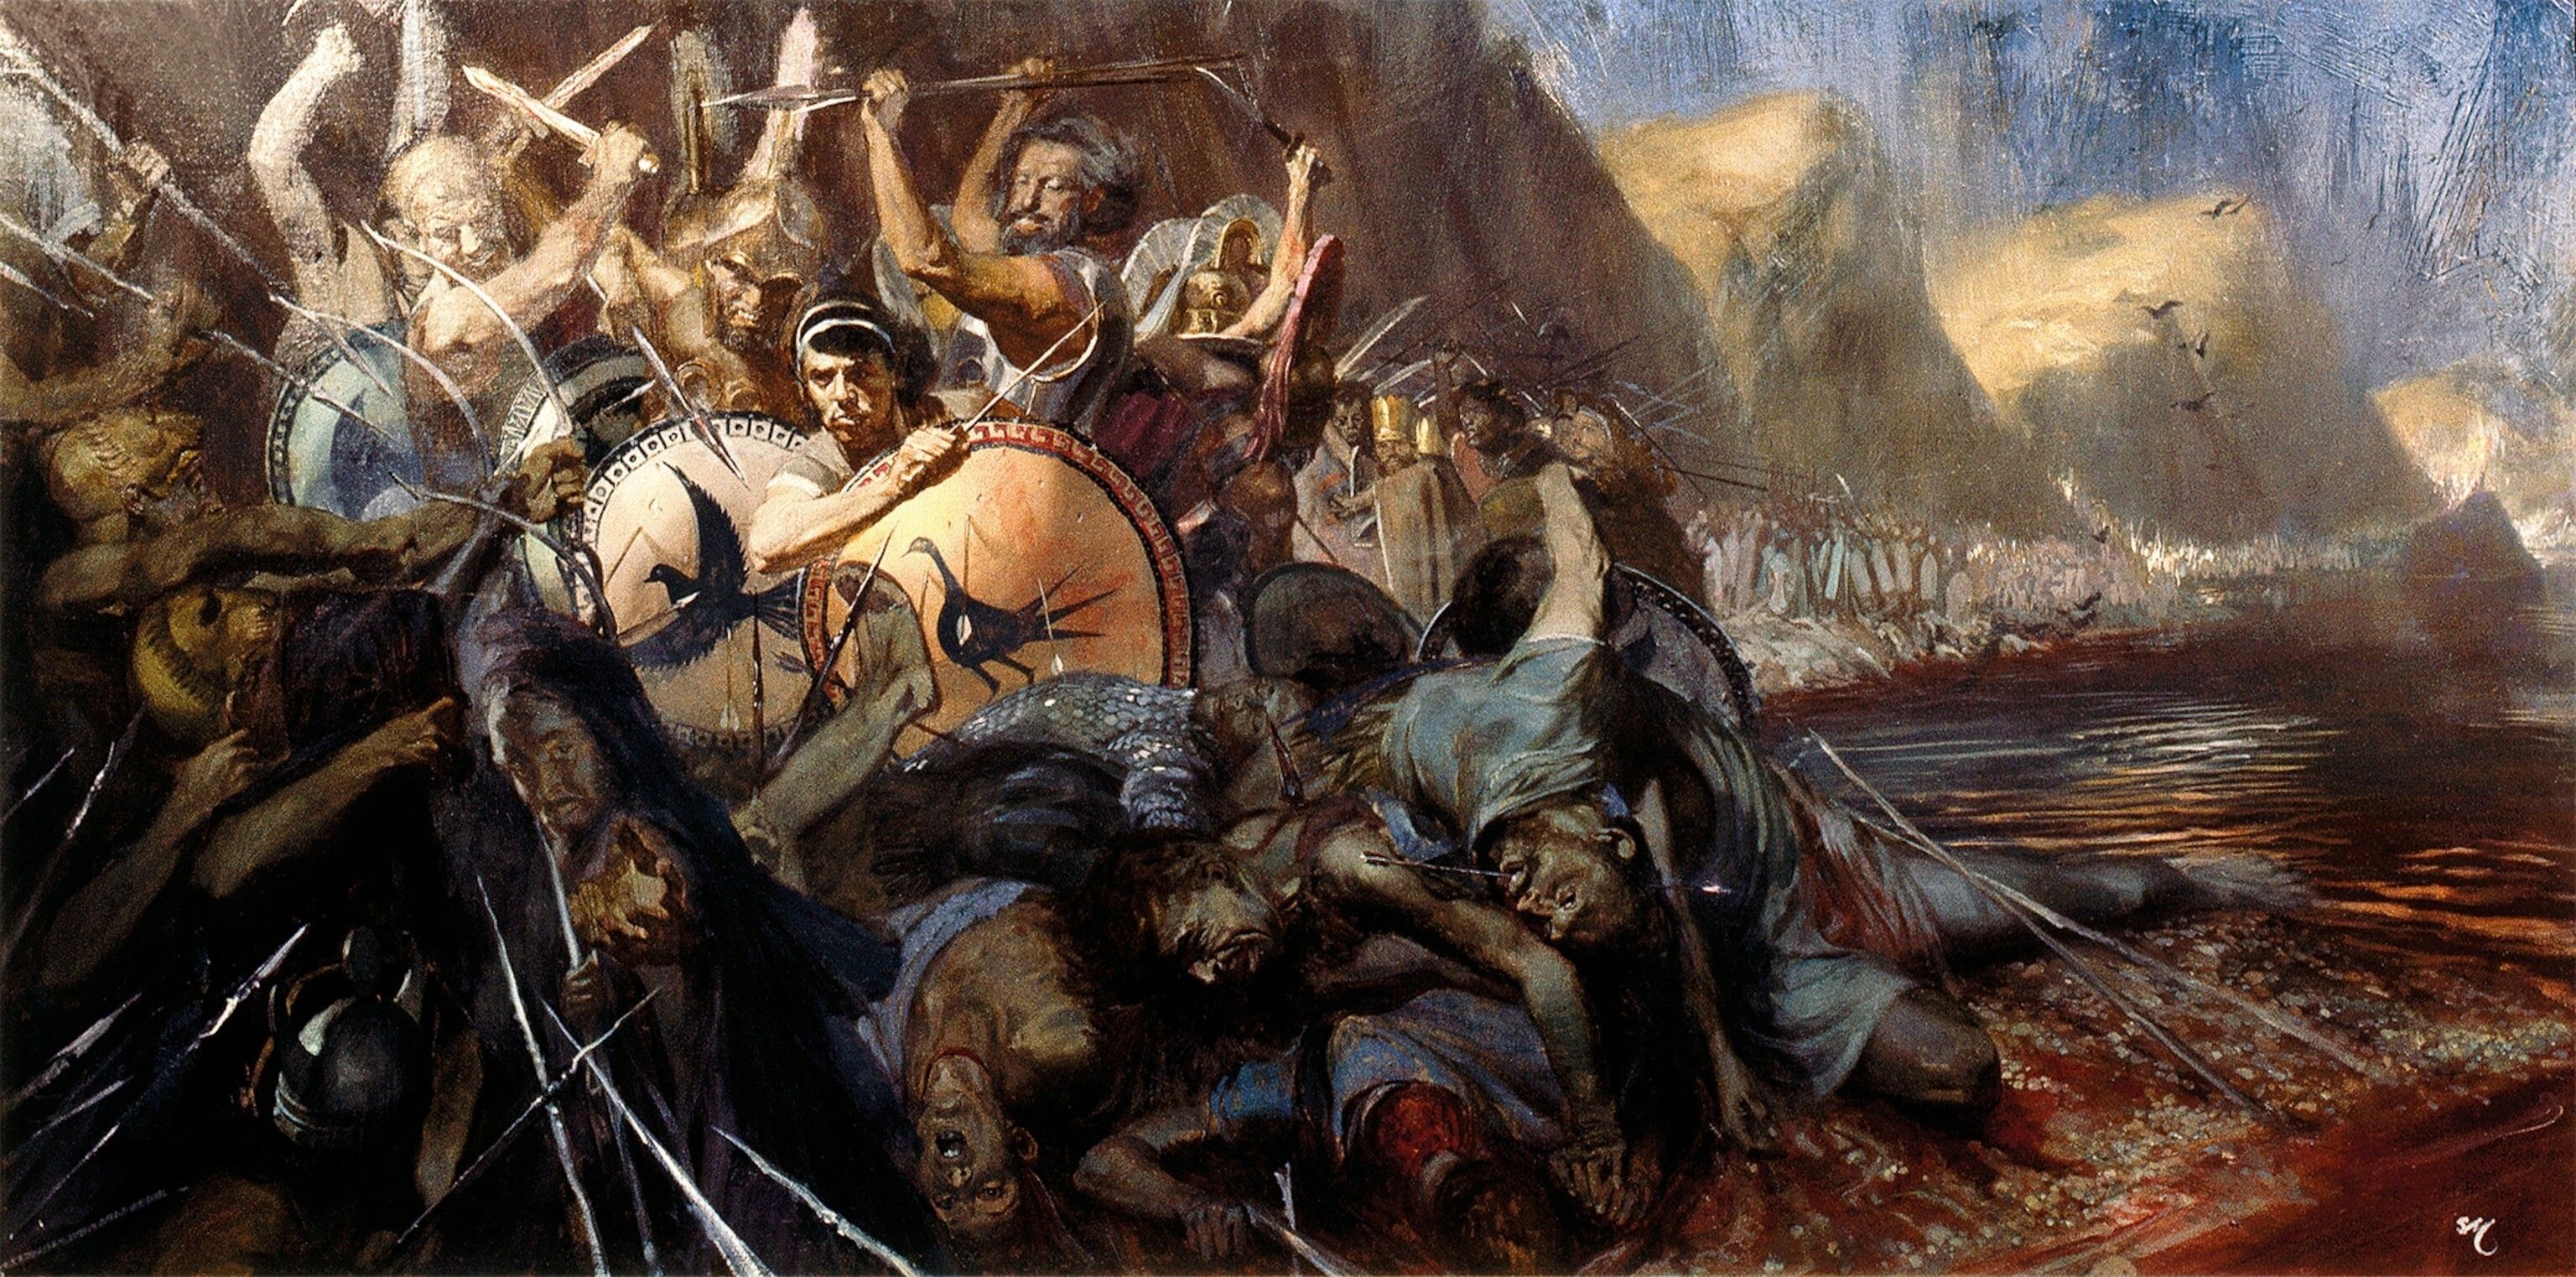 Slaget ved Thermopylae: 300 spartanere vs verden